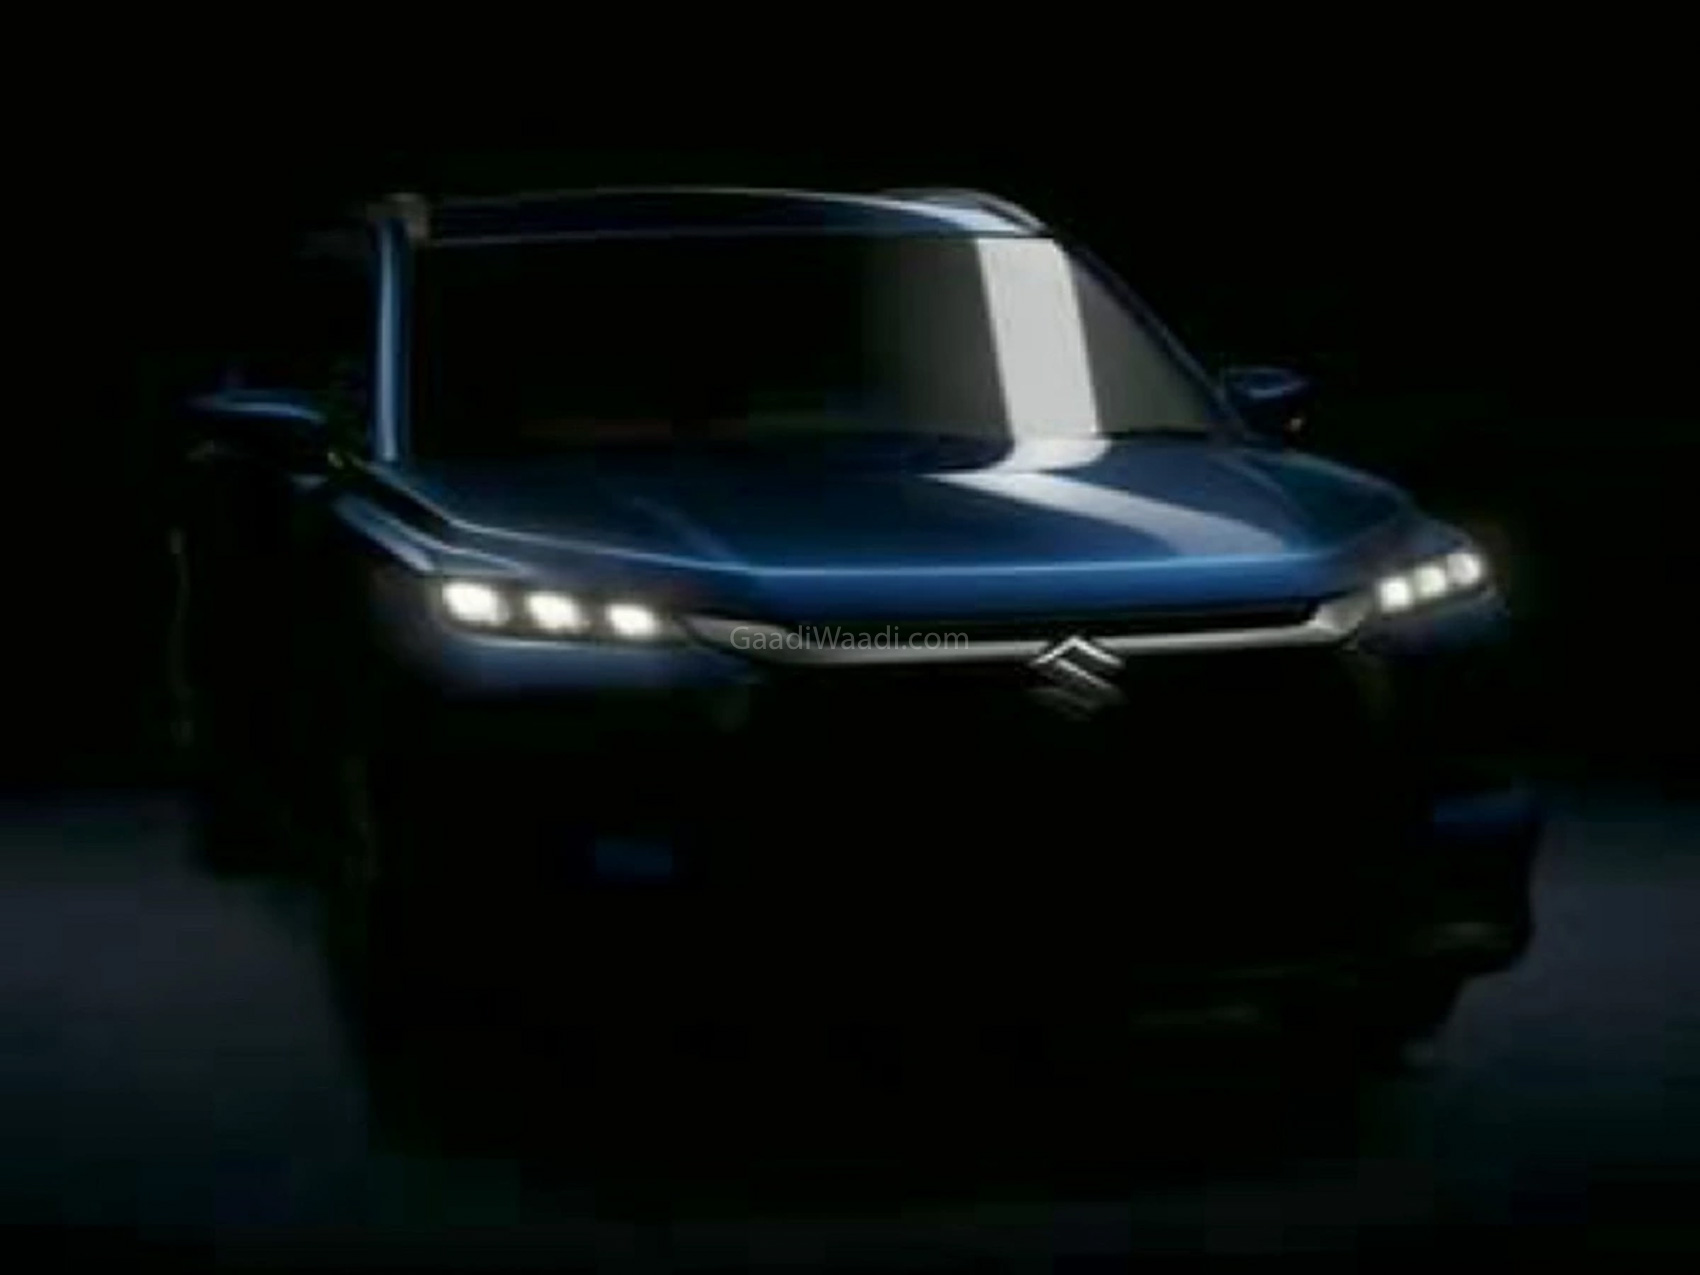 Upcoming Vitara SUV To Become The Most Tech Advanced Maruti Ever